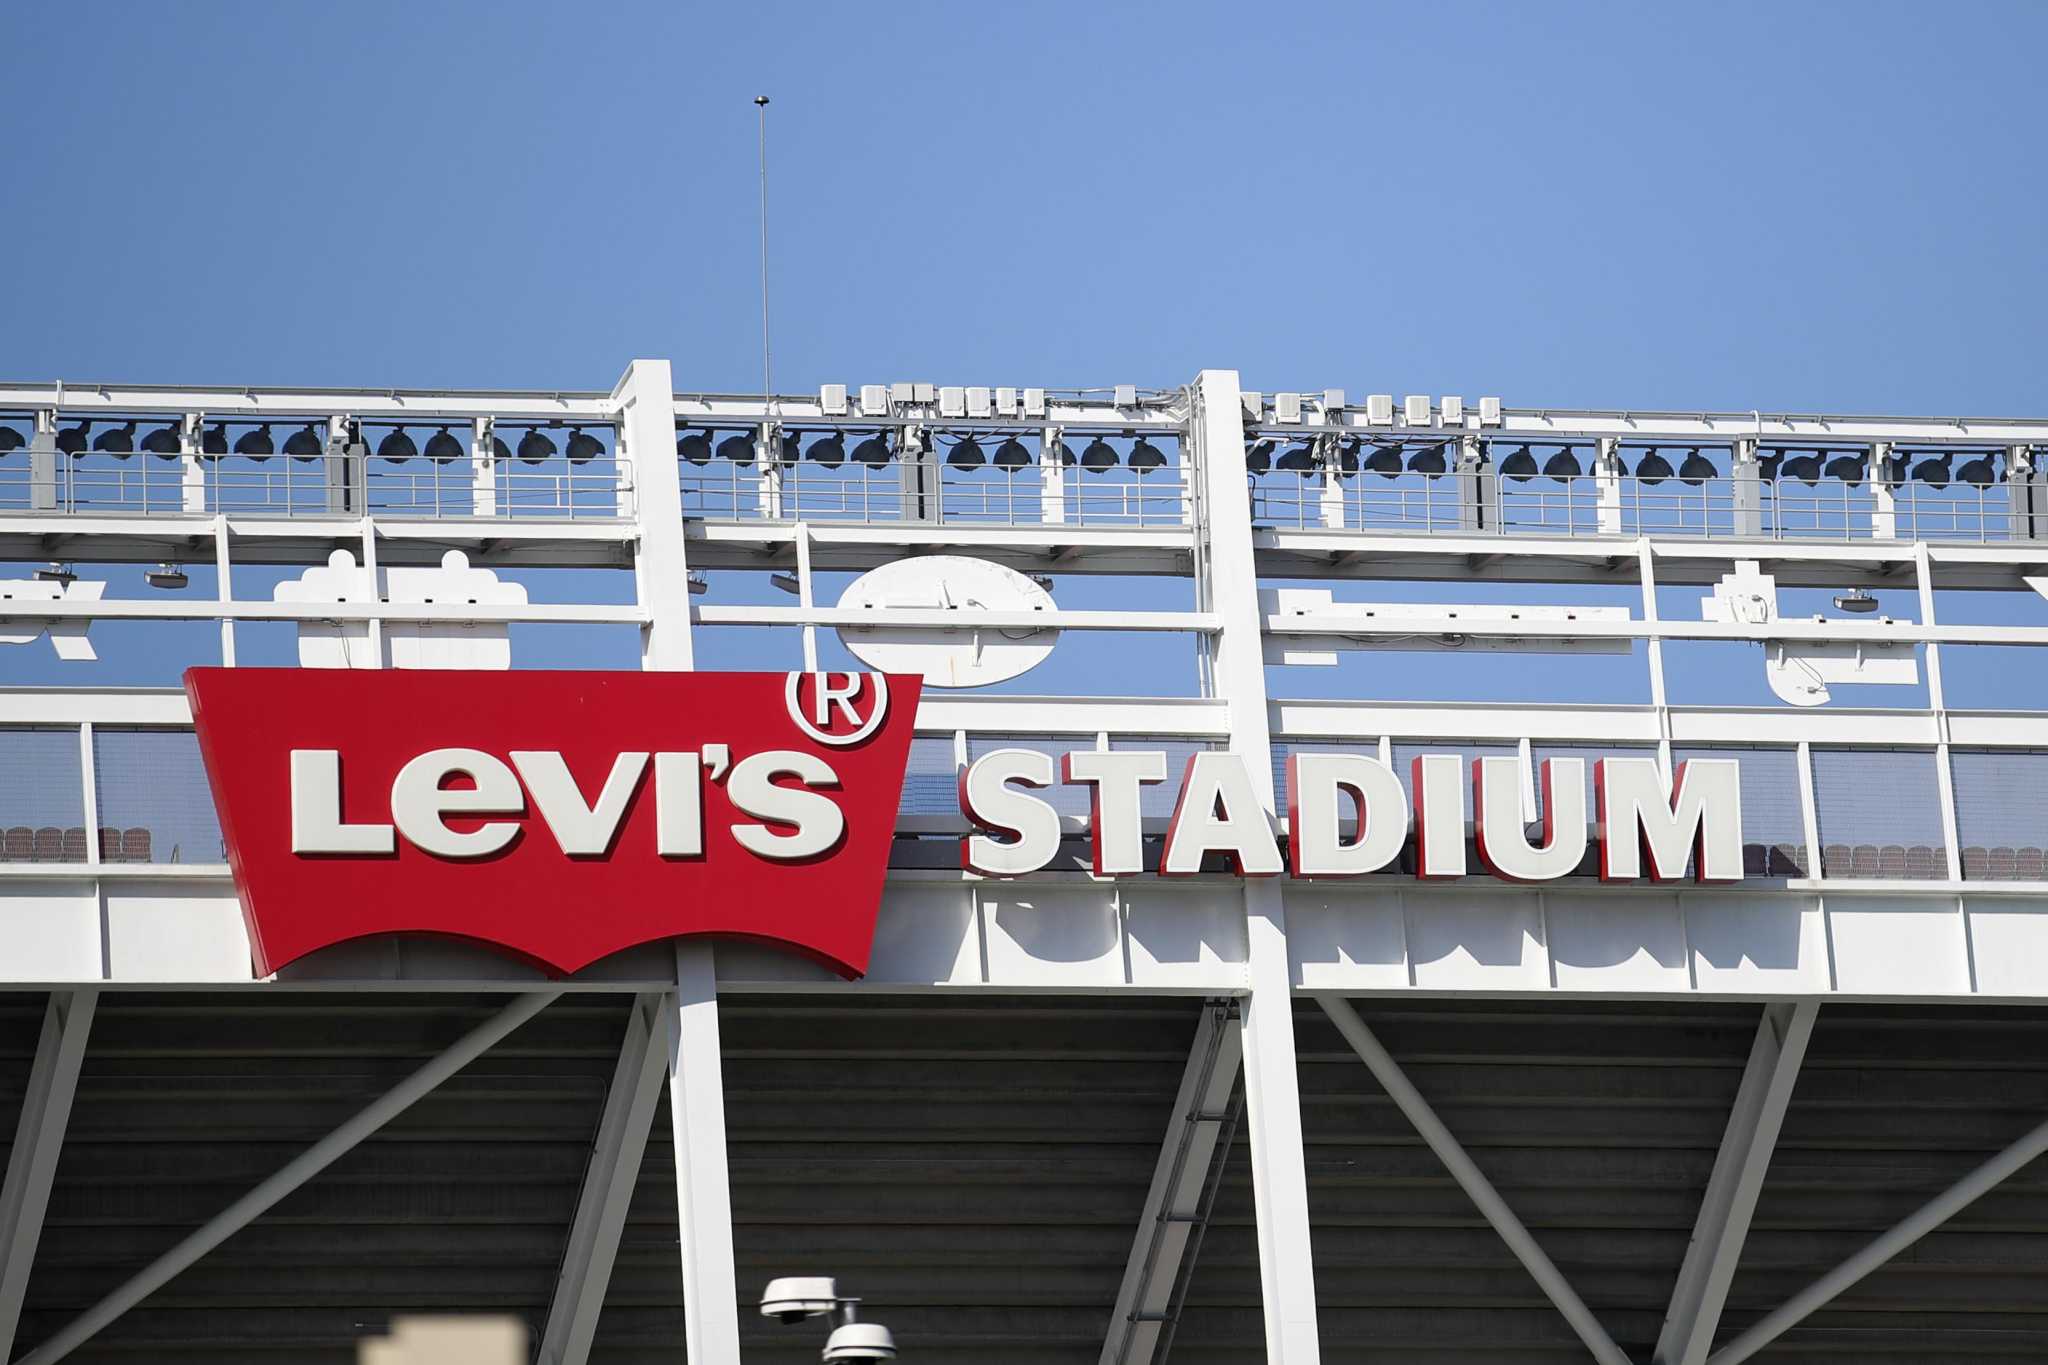 49ers offer to settle Santa Clara's Levi's Stadium revenue lawsuit